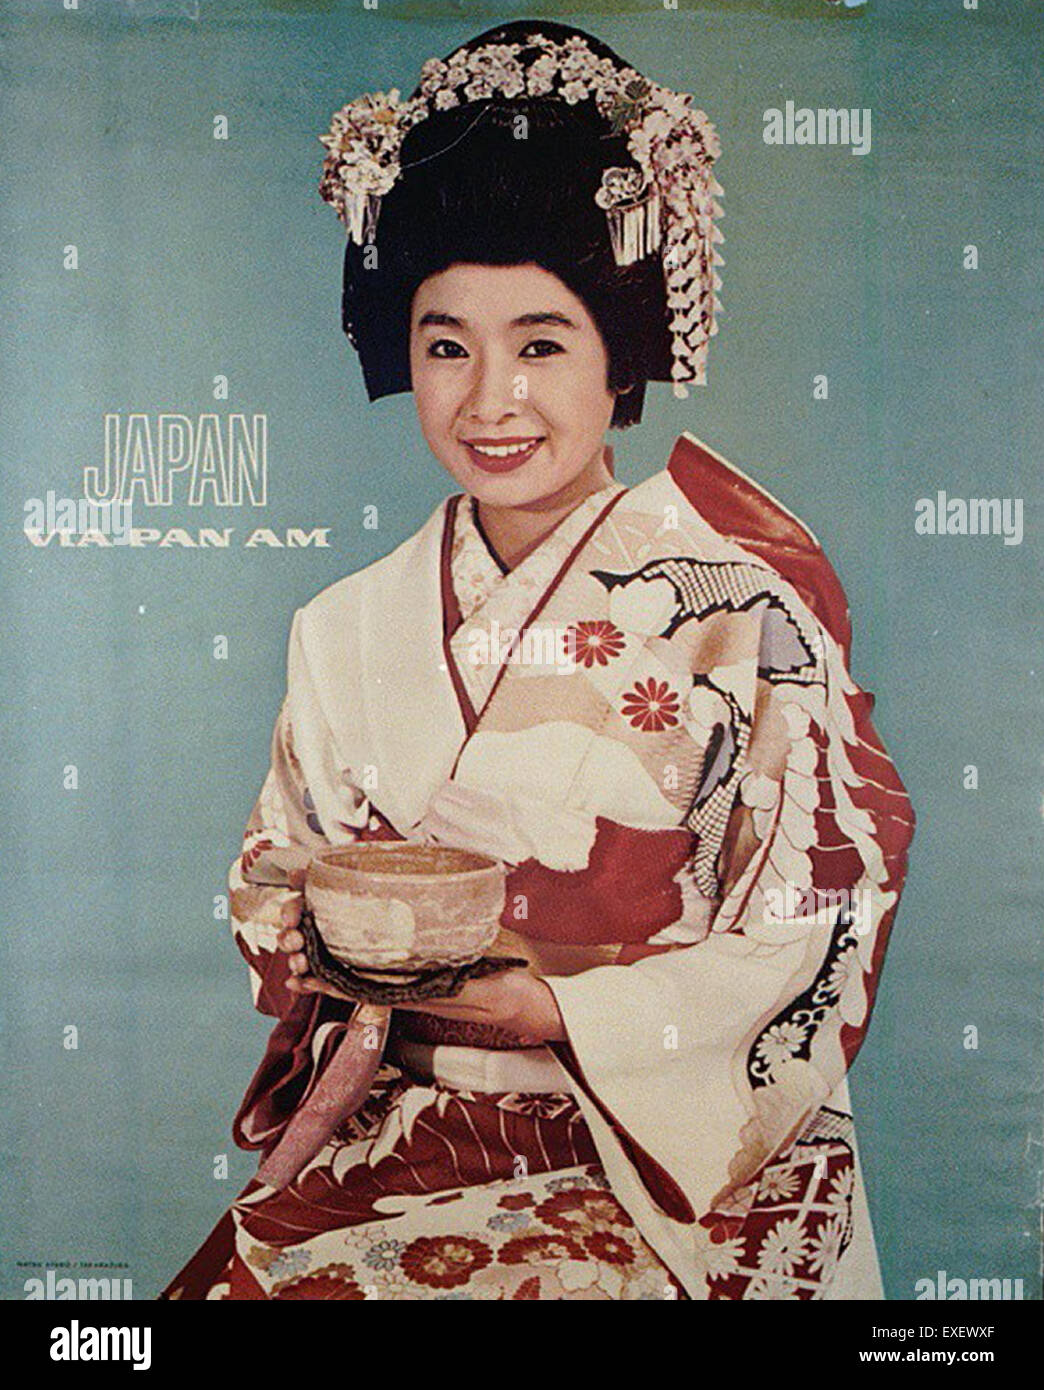 PanAm Japón Poster Foto de stock